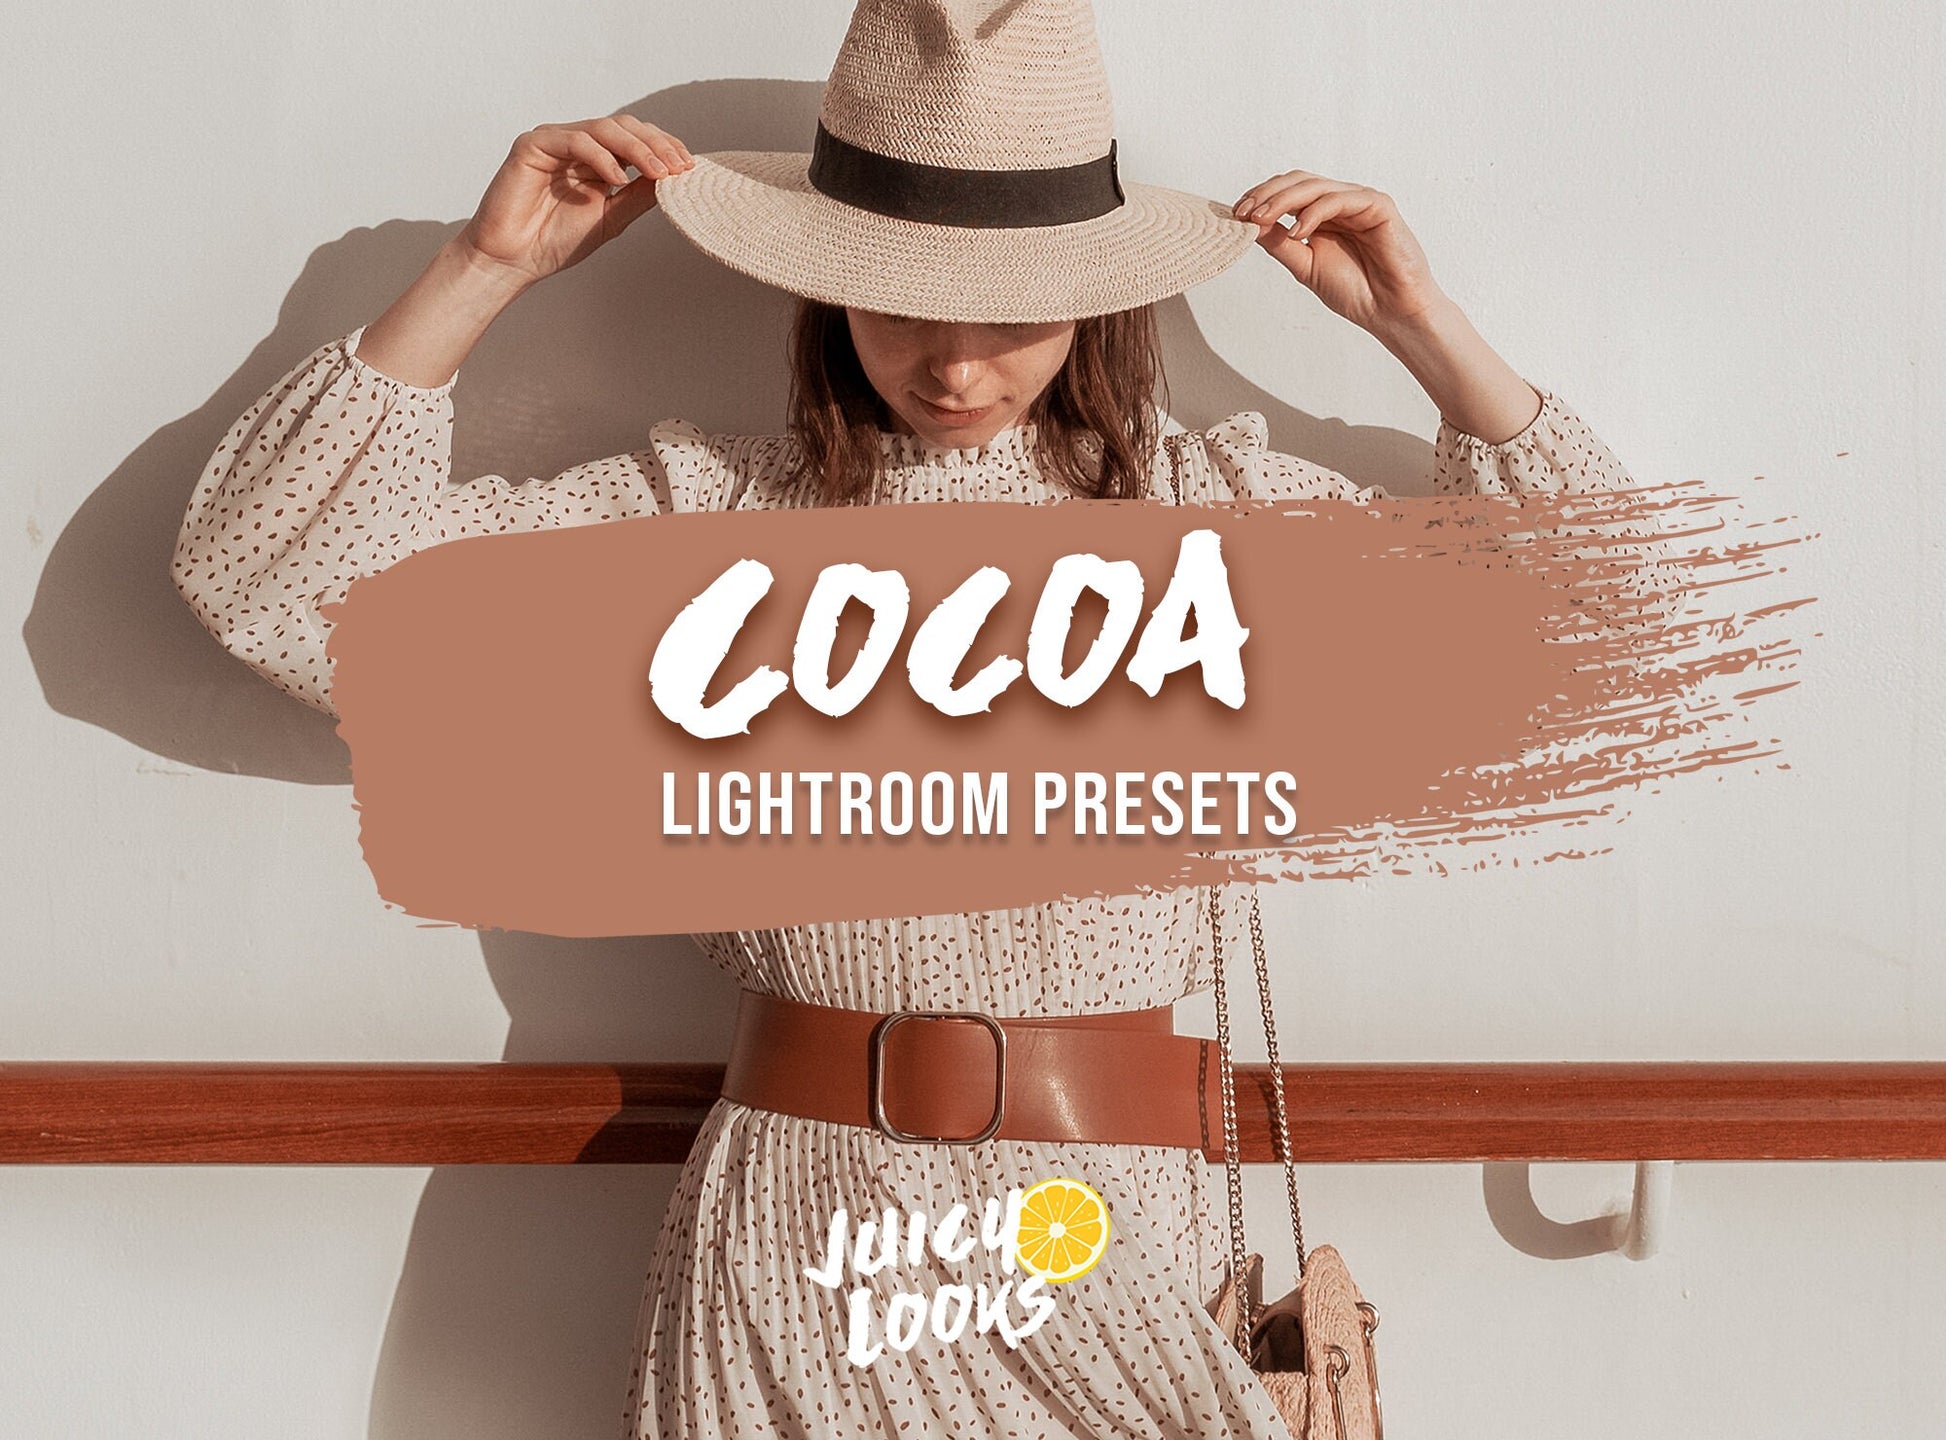 Cocoa Lightroom Presets for Mobile & Desktop - Juicy Looks Presets